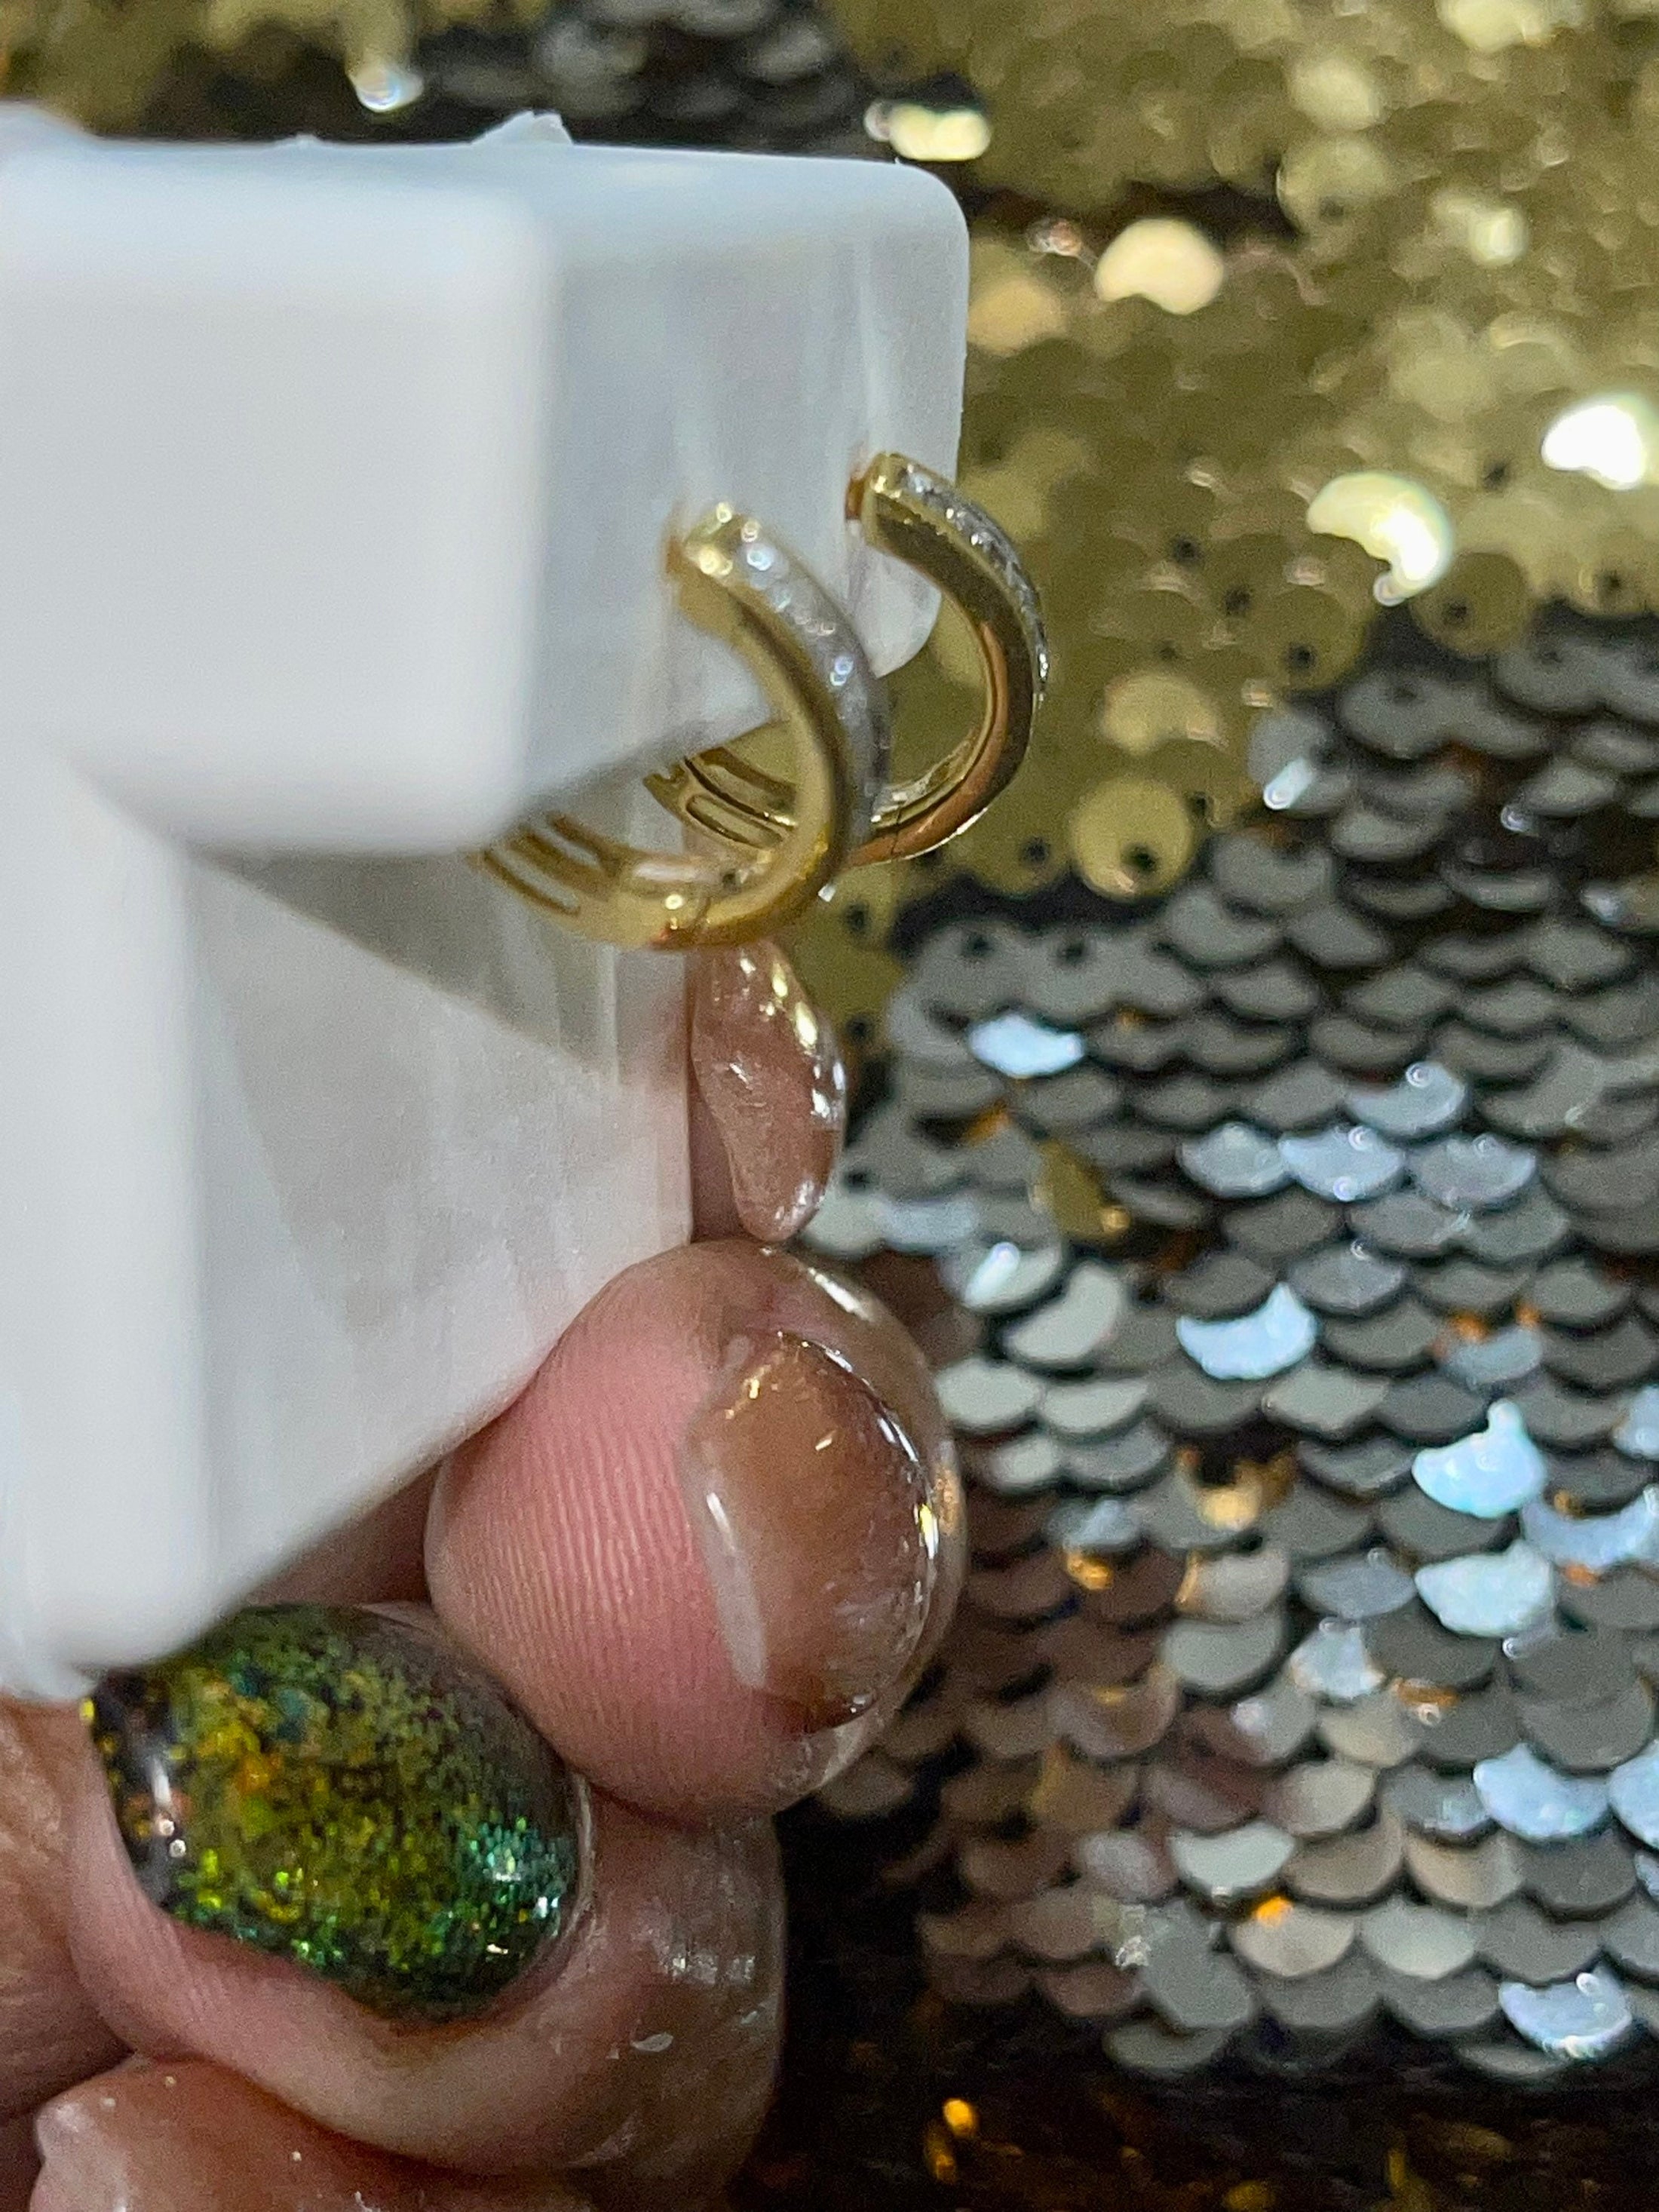 Huggie Hoop Earrings | 10k Gold Vermeil | Diamond Earrings | For Her | Christmas Gift